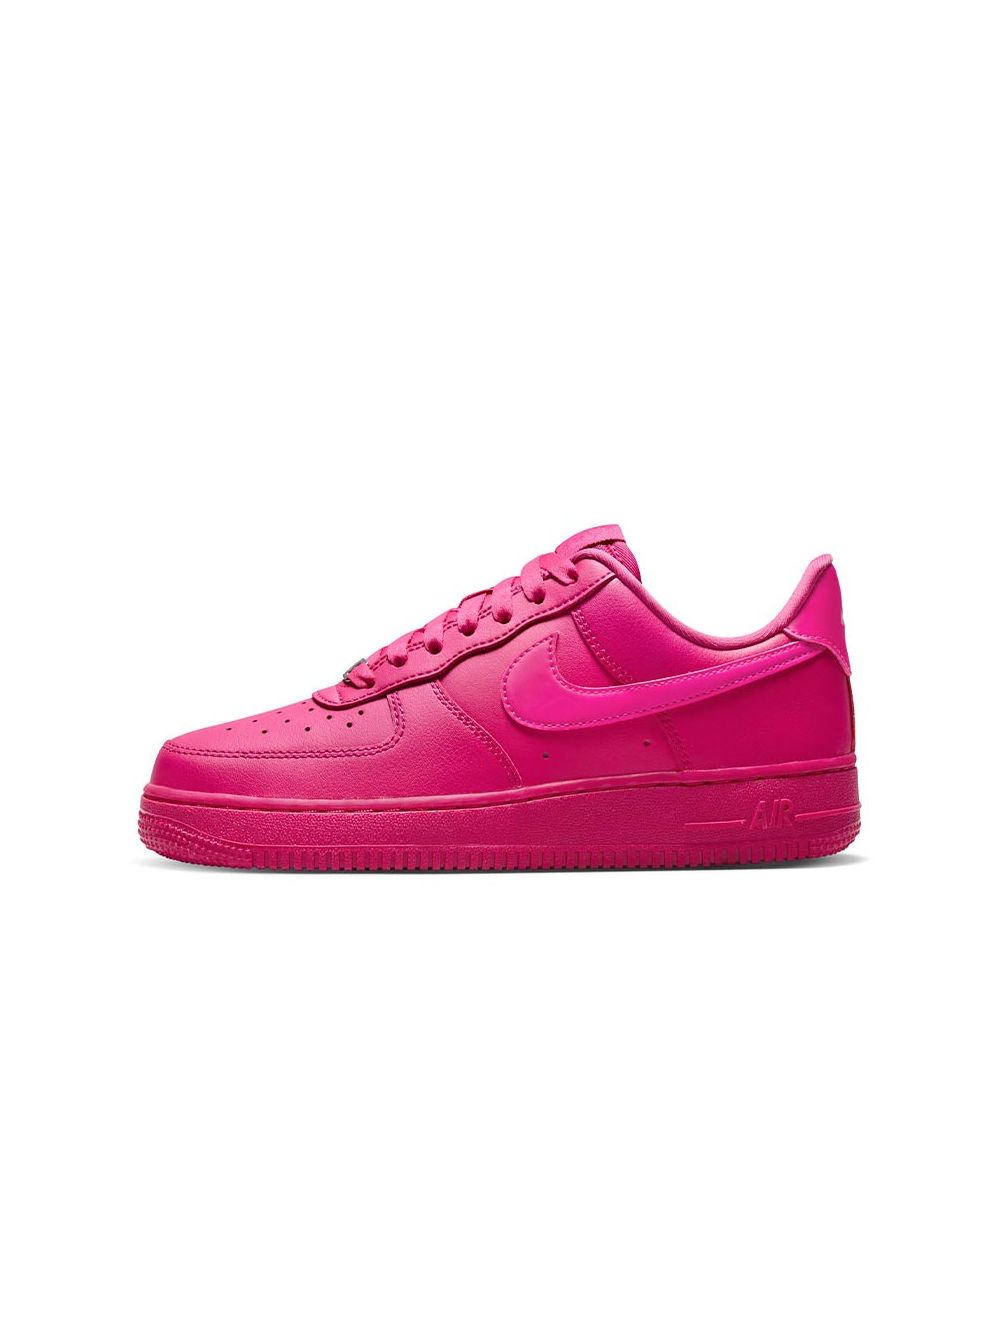 Shop Nike Air Force 1 07 Womens Shoes Fireberry | Studio 88